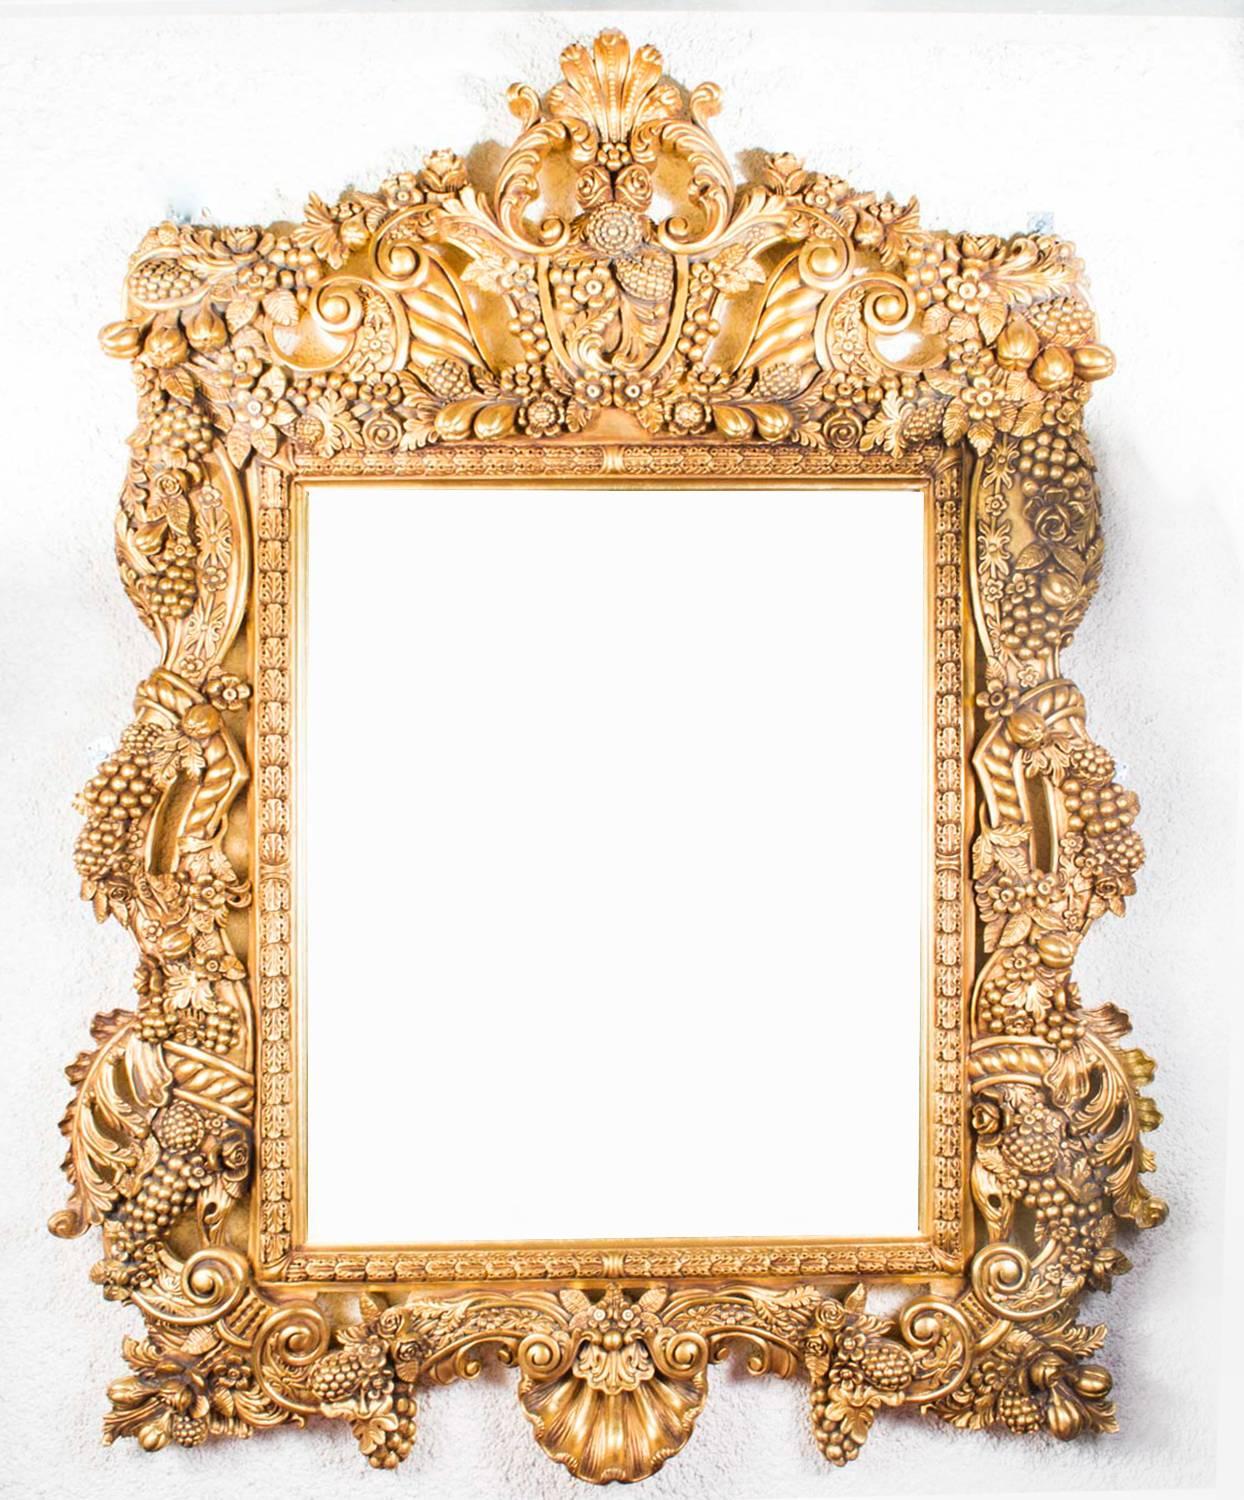 Decorative Ornate Florentine Giltwood Mirror 190 x 150 cm For Sale 2